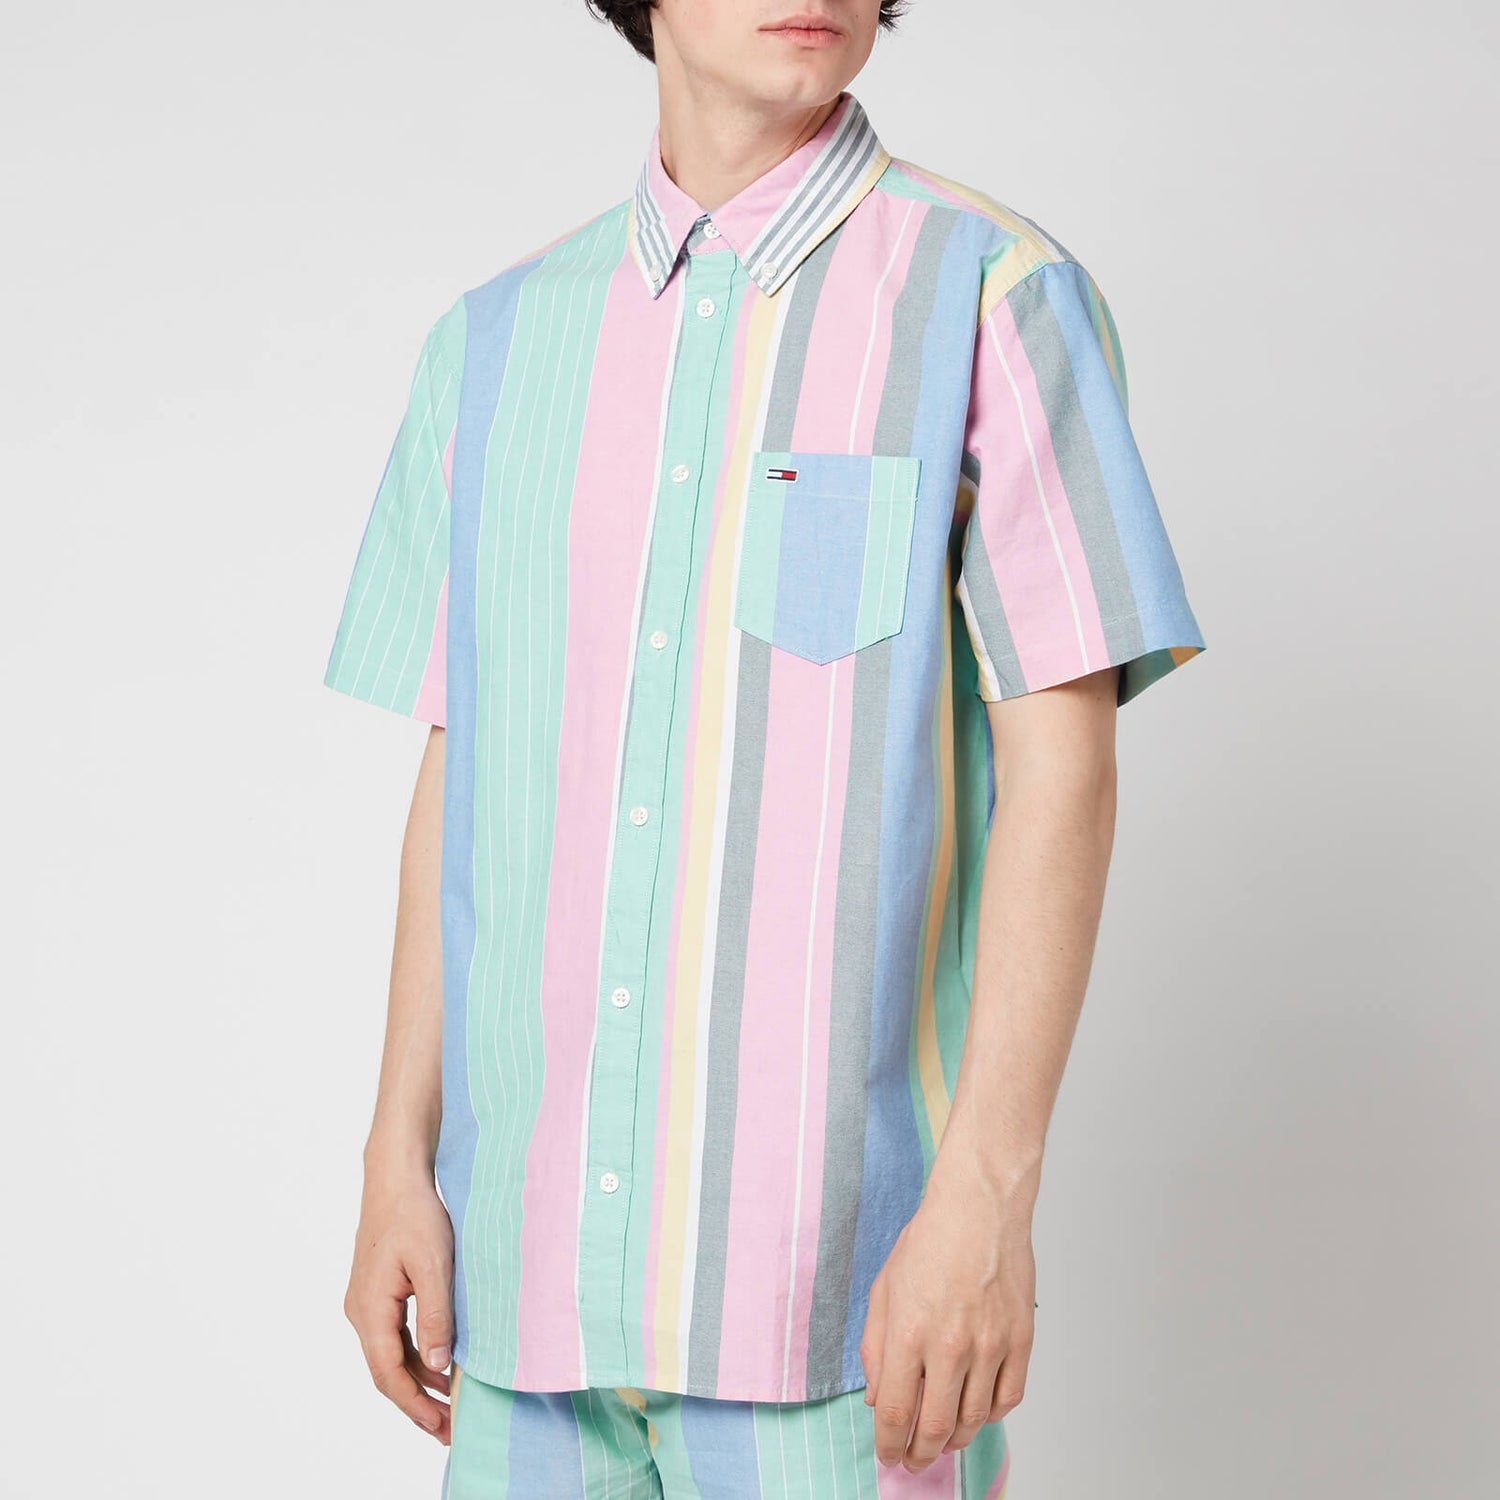 Tommy Jeans Men's Stripe 2 Short Sleeve Shirt - Romantic Pink Multi